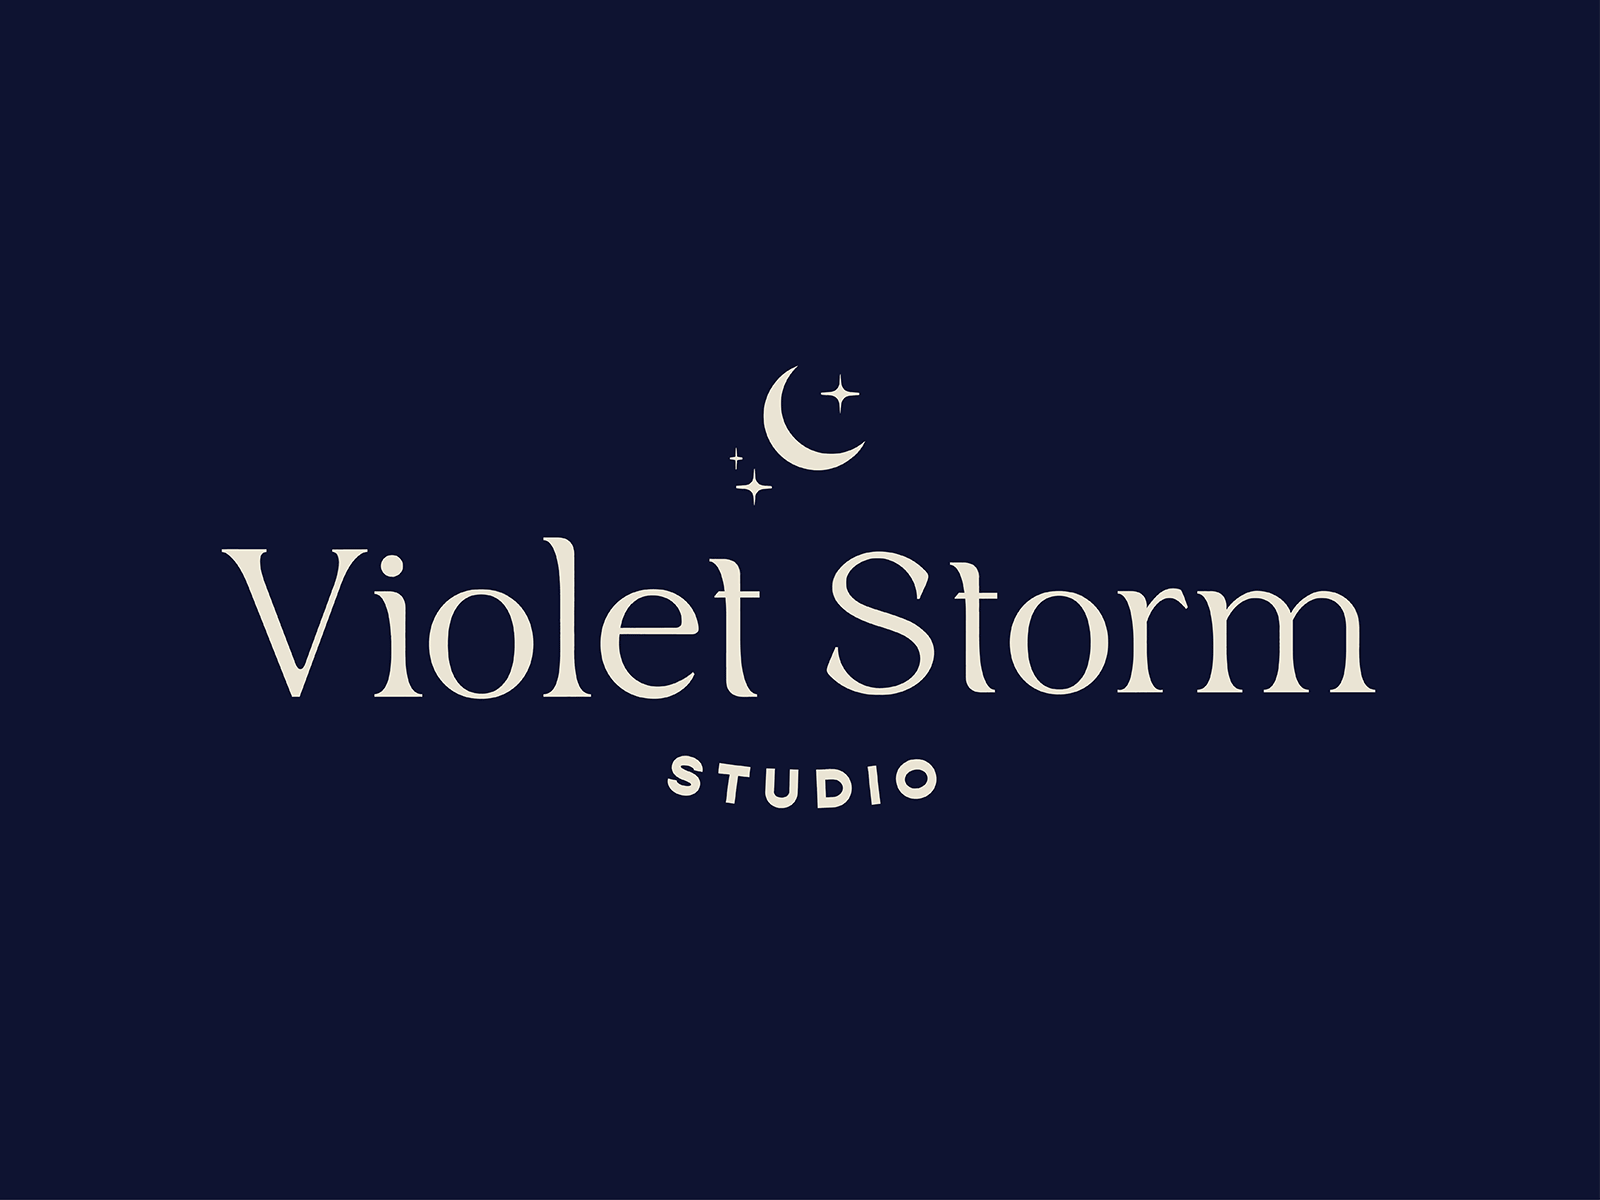 Violet Storm Studio